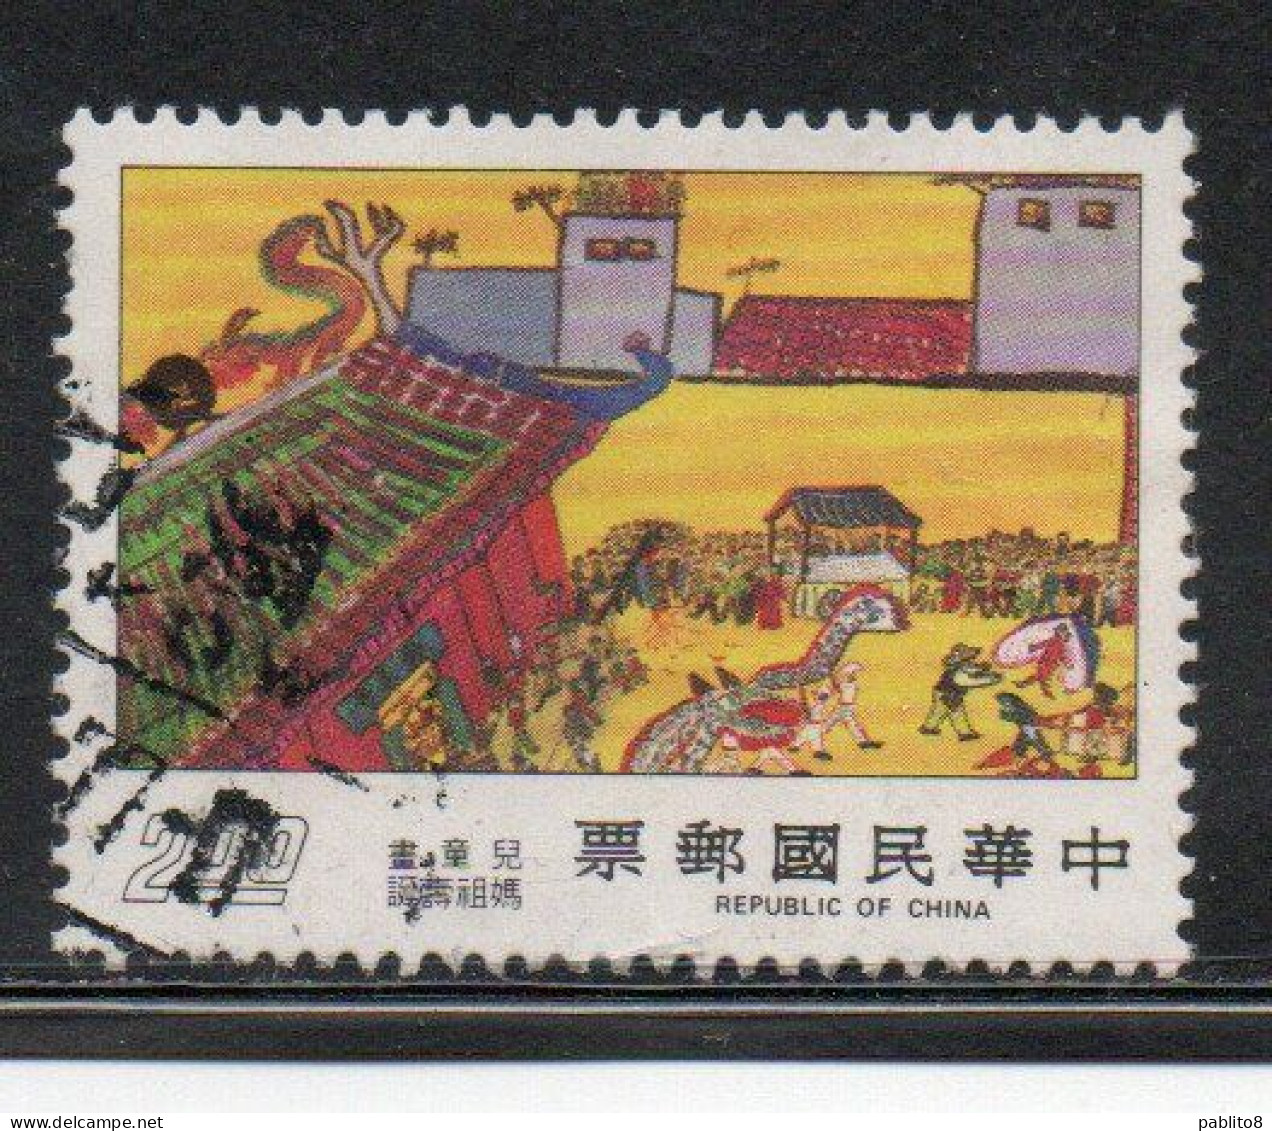 CHINA REPUBLIC CINA TAIWAN FORMOSA 1977 CHILDREN'S DRAWINGS SEA GODDESS FESTIVAL 2$ USED USATO OBLITERE' - Usados